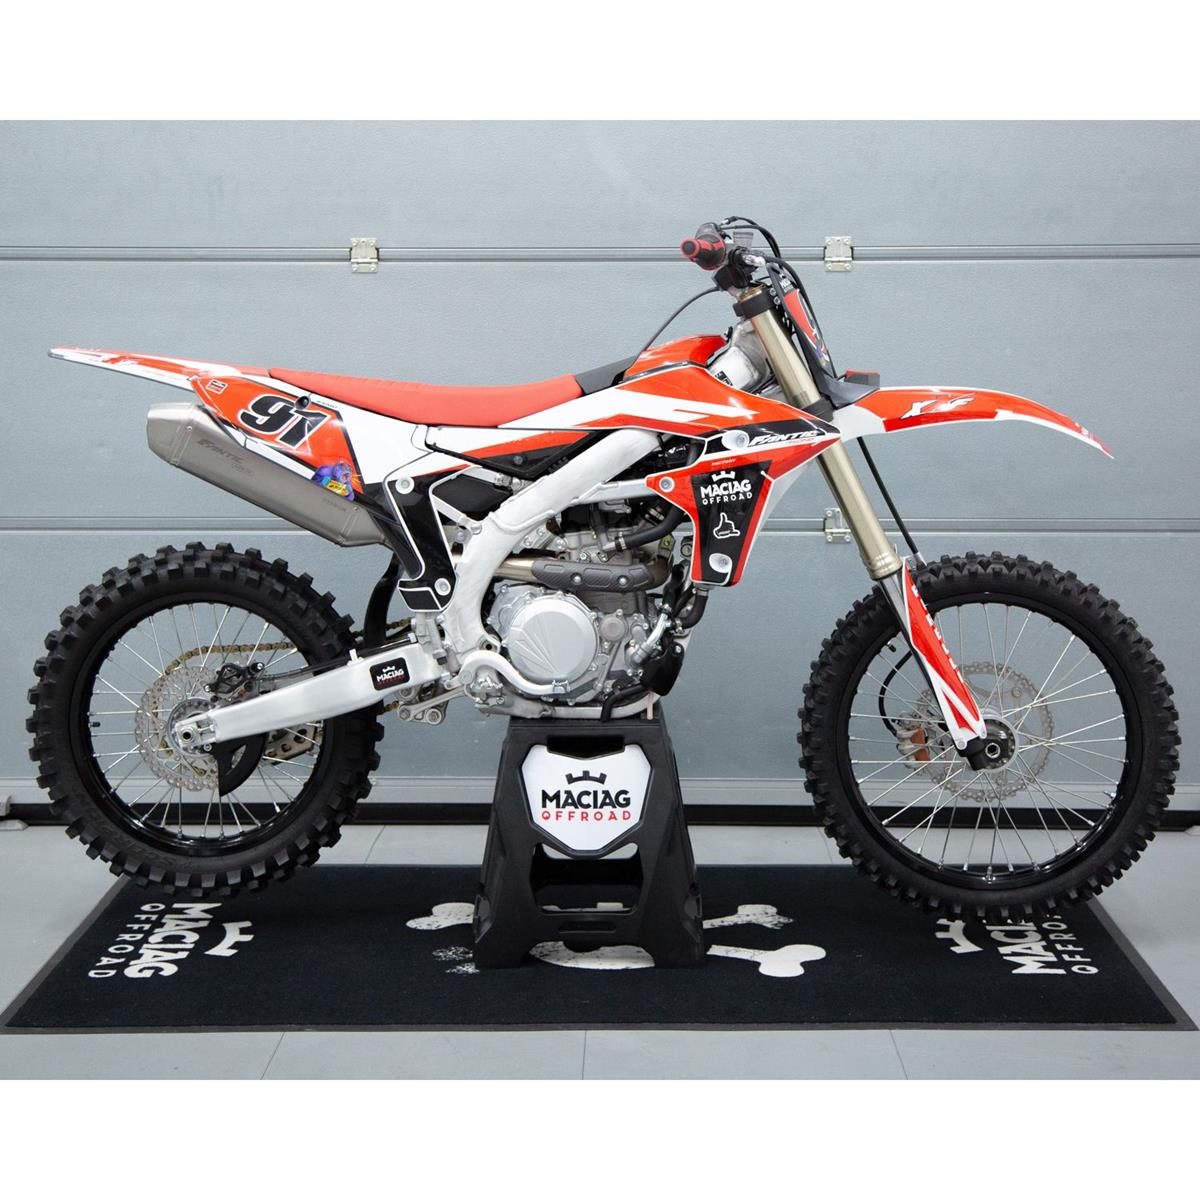 Fantic Motocross XXF 450 2022  Veicolo nuovo - Rosso-Bianco